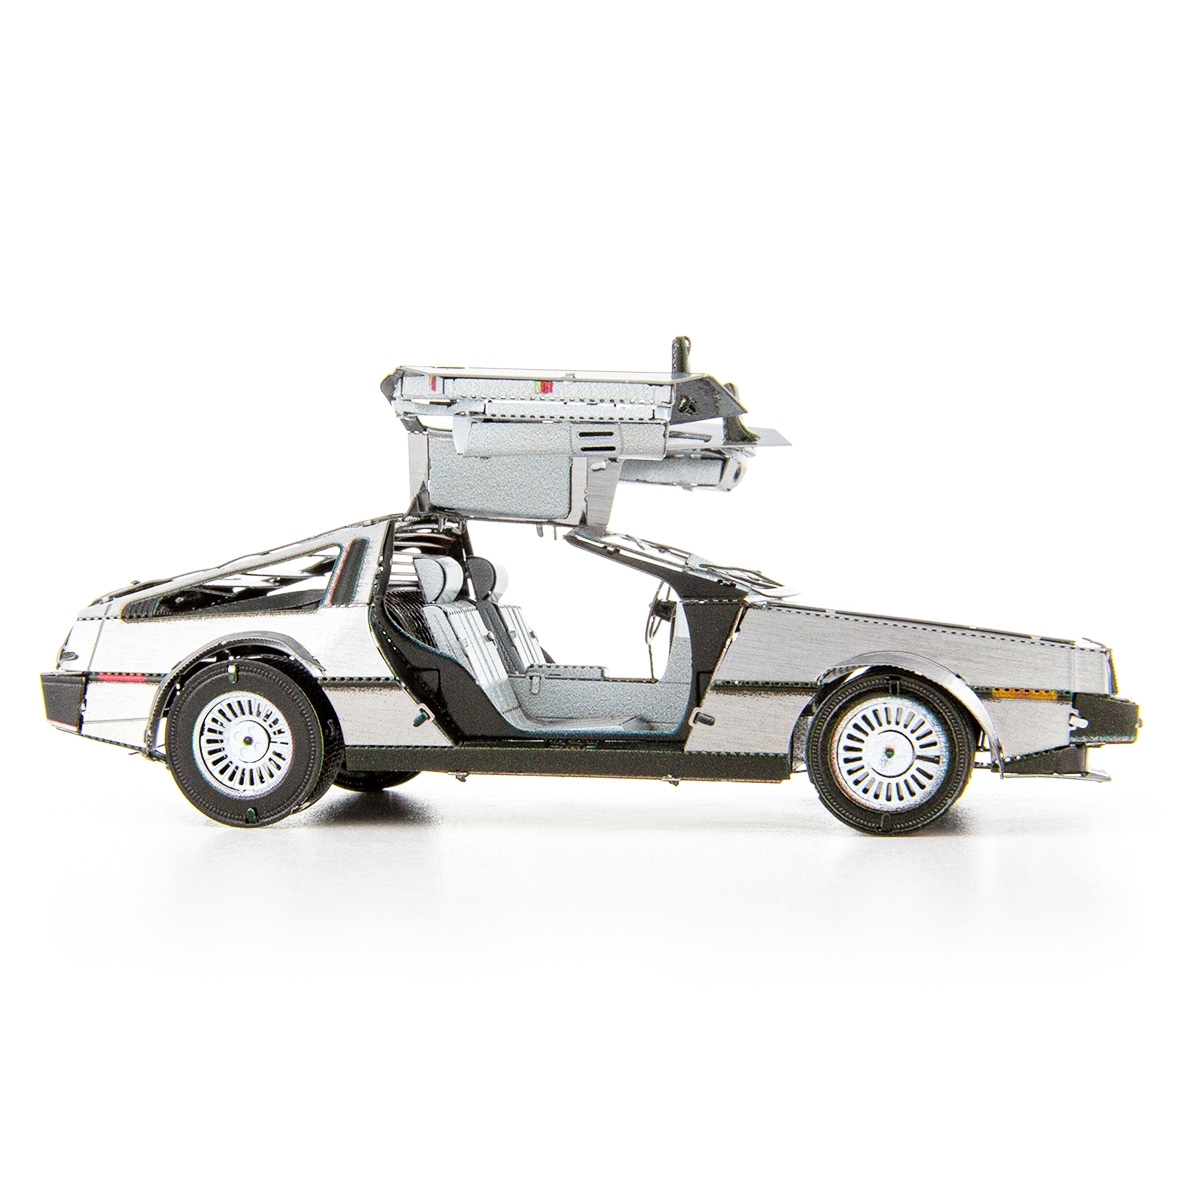 Fascinations DeLorean Metal Earth 3D Collectible Model Car Kit MMS181 